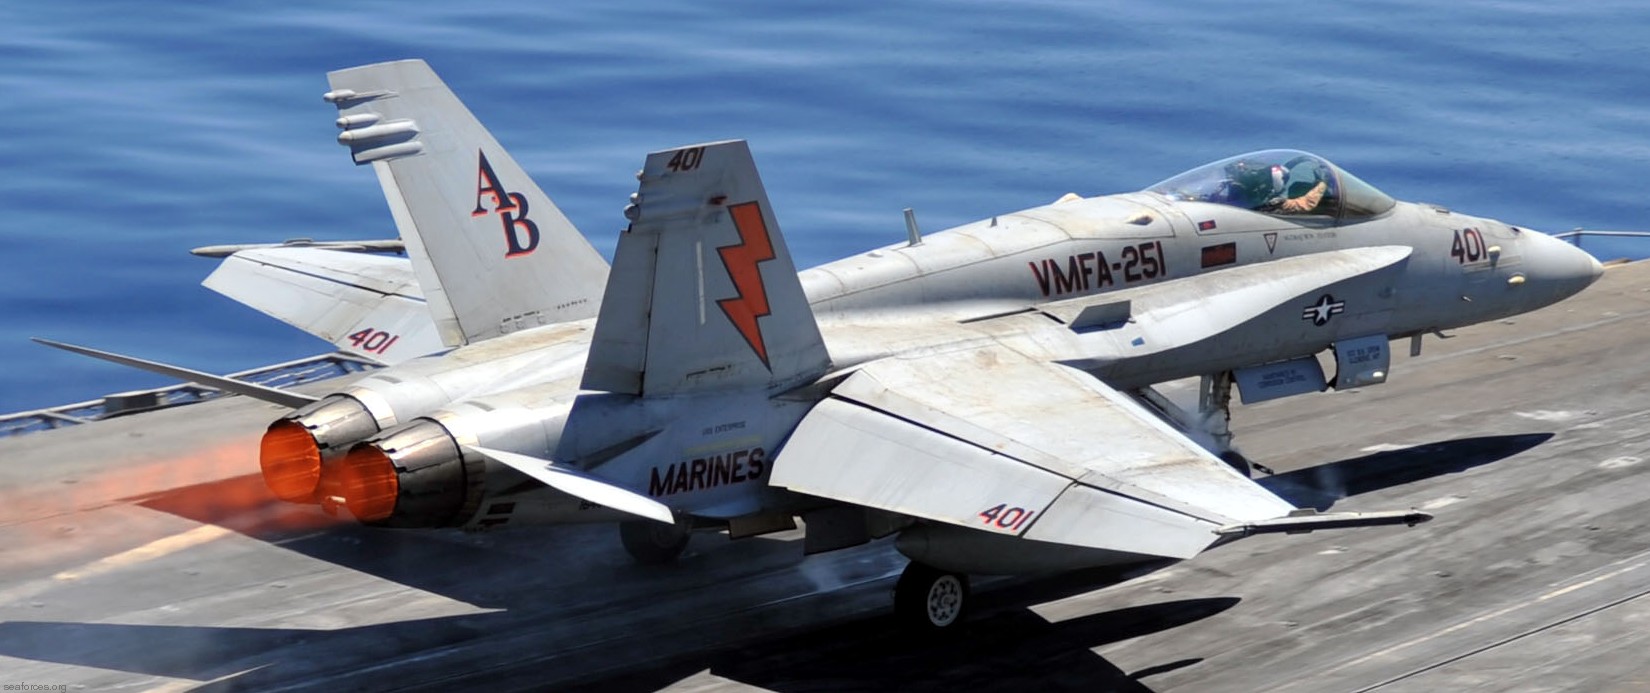 vmfa-251 thunderbolts marine fighter attack squadron f/a-18c hornet cvw-1 uss enterprise cvn-65 36